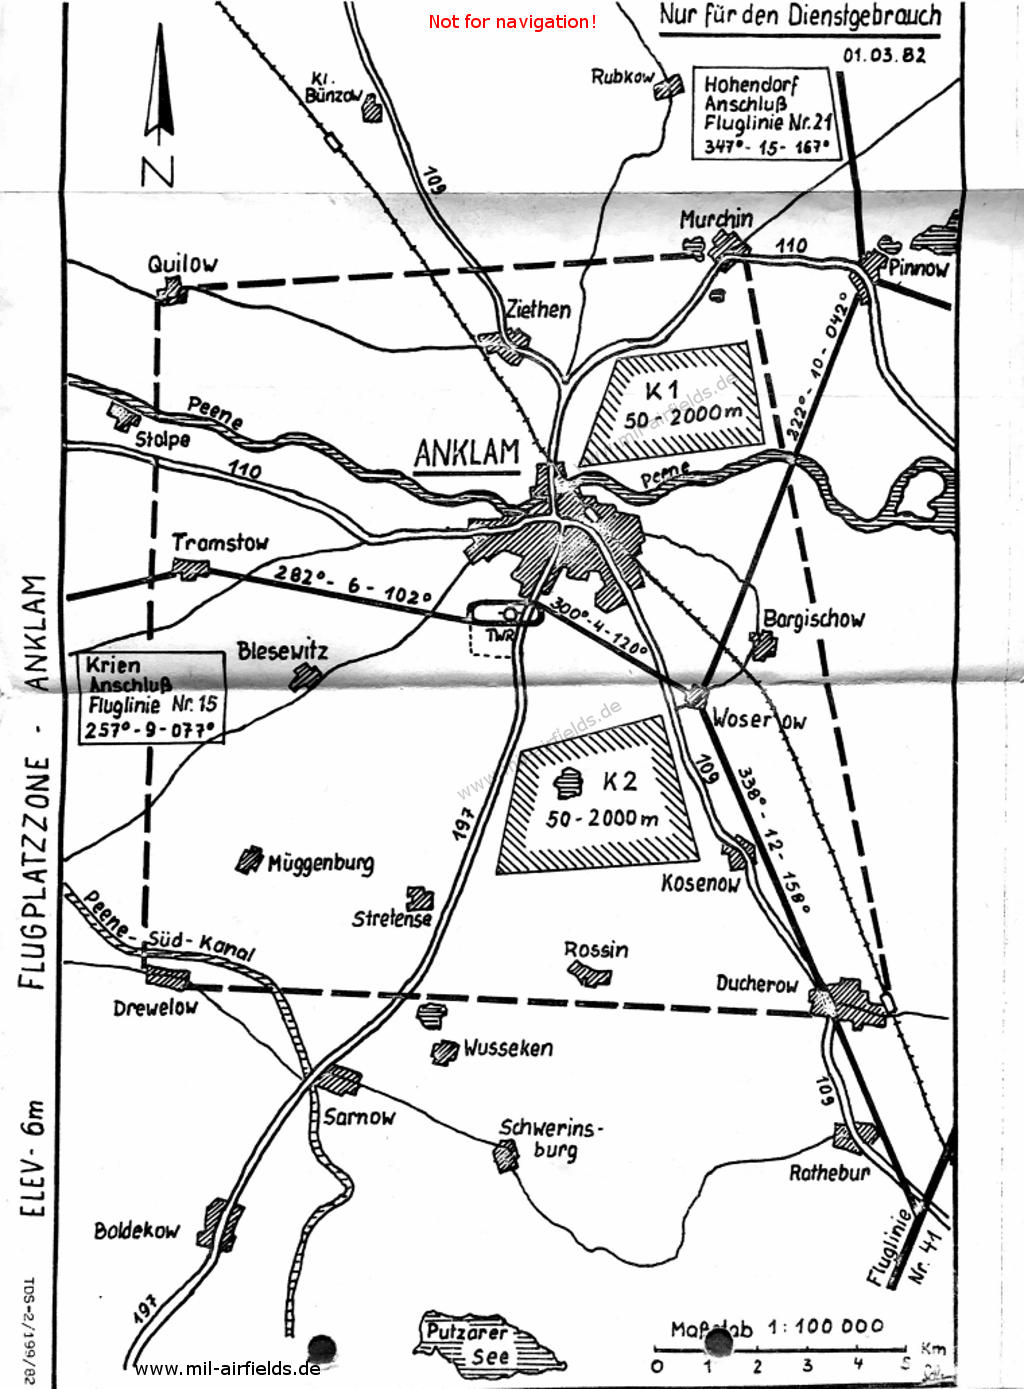 Anklam aerodrome zone, GDR 1982